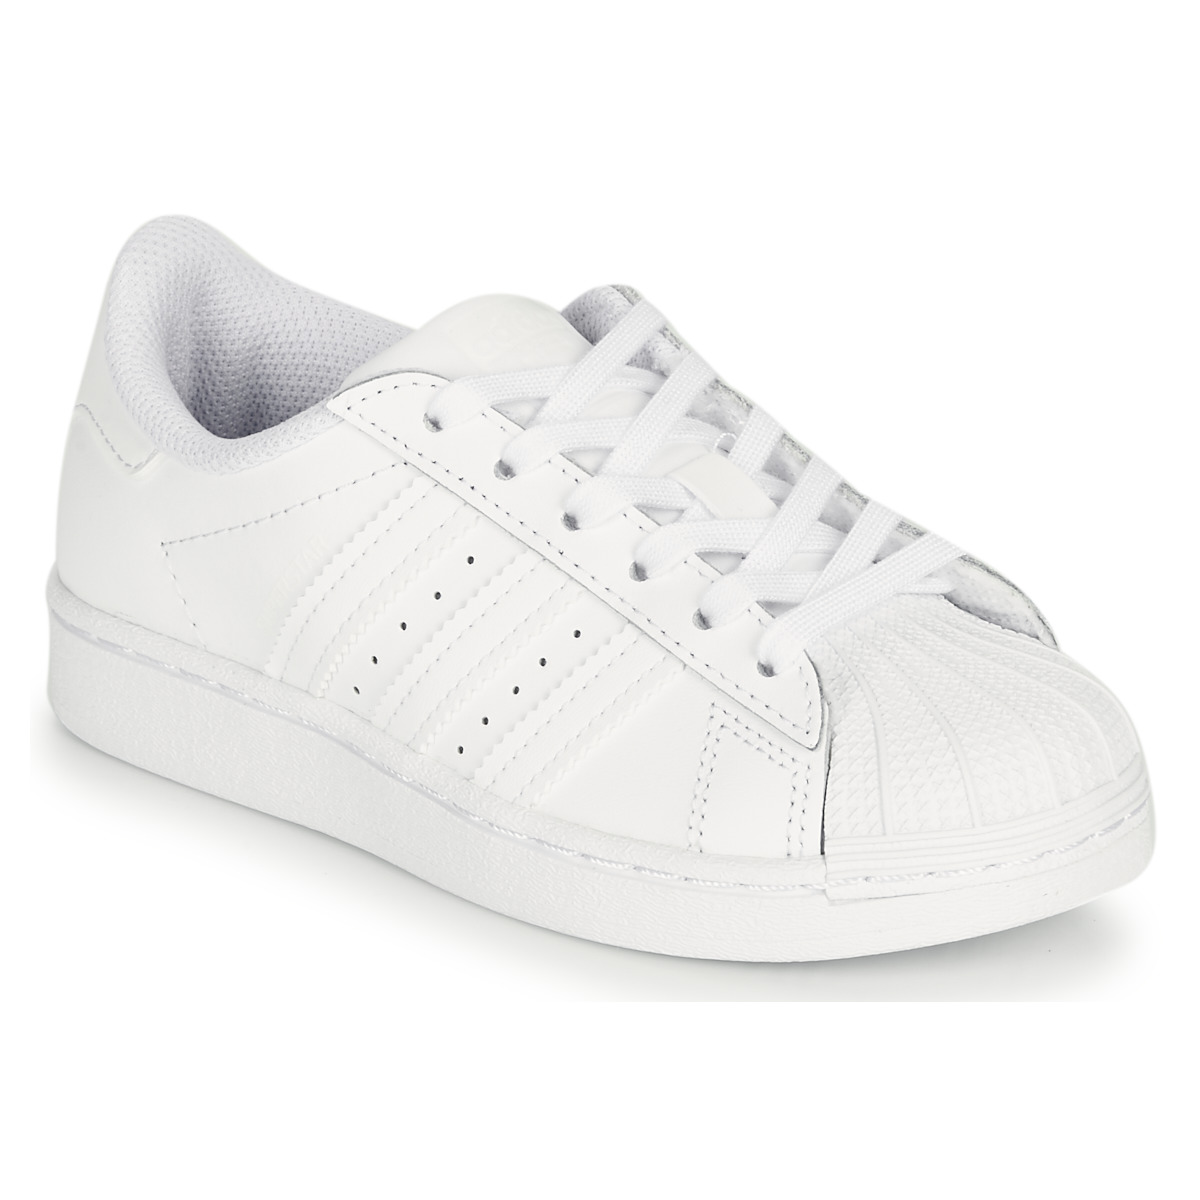 Sko Børn Lave sneakers adidas Originals SUPERSTAR C Hvid